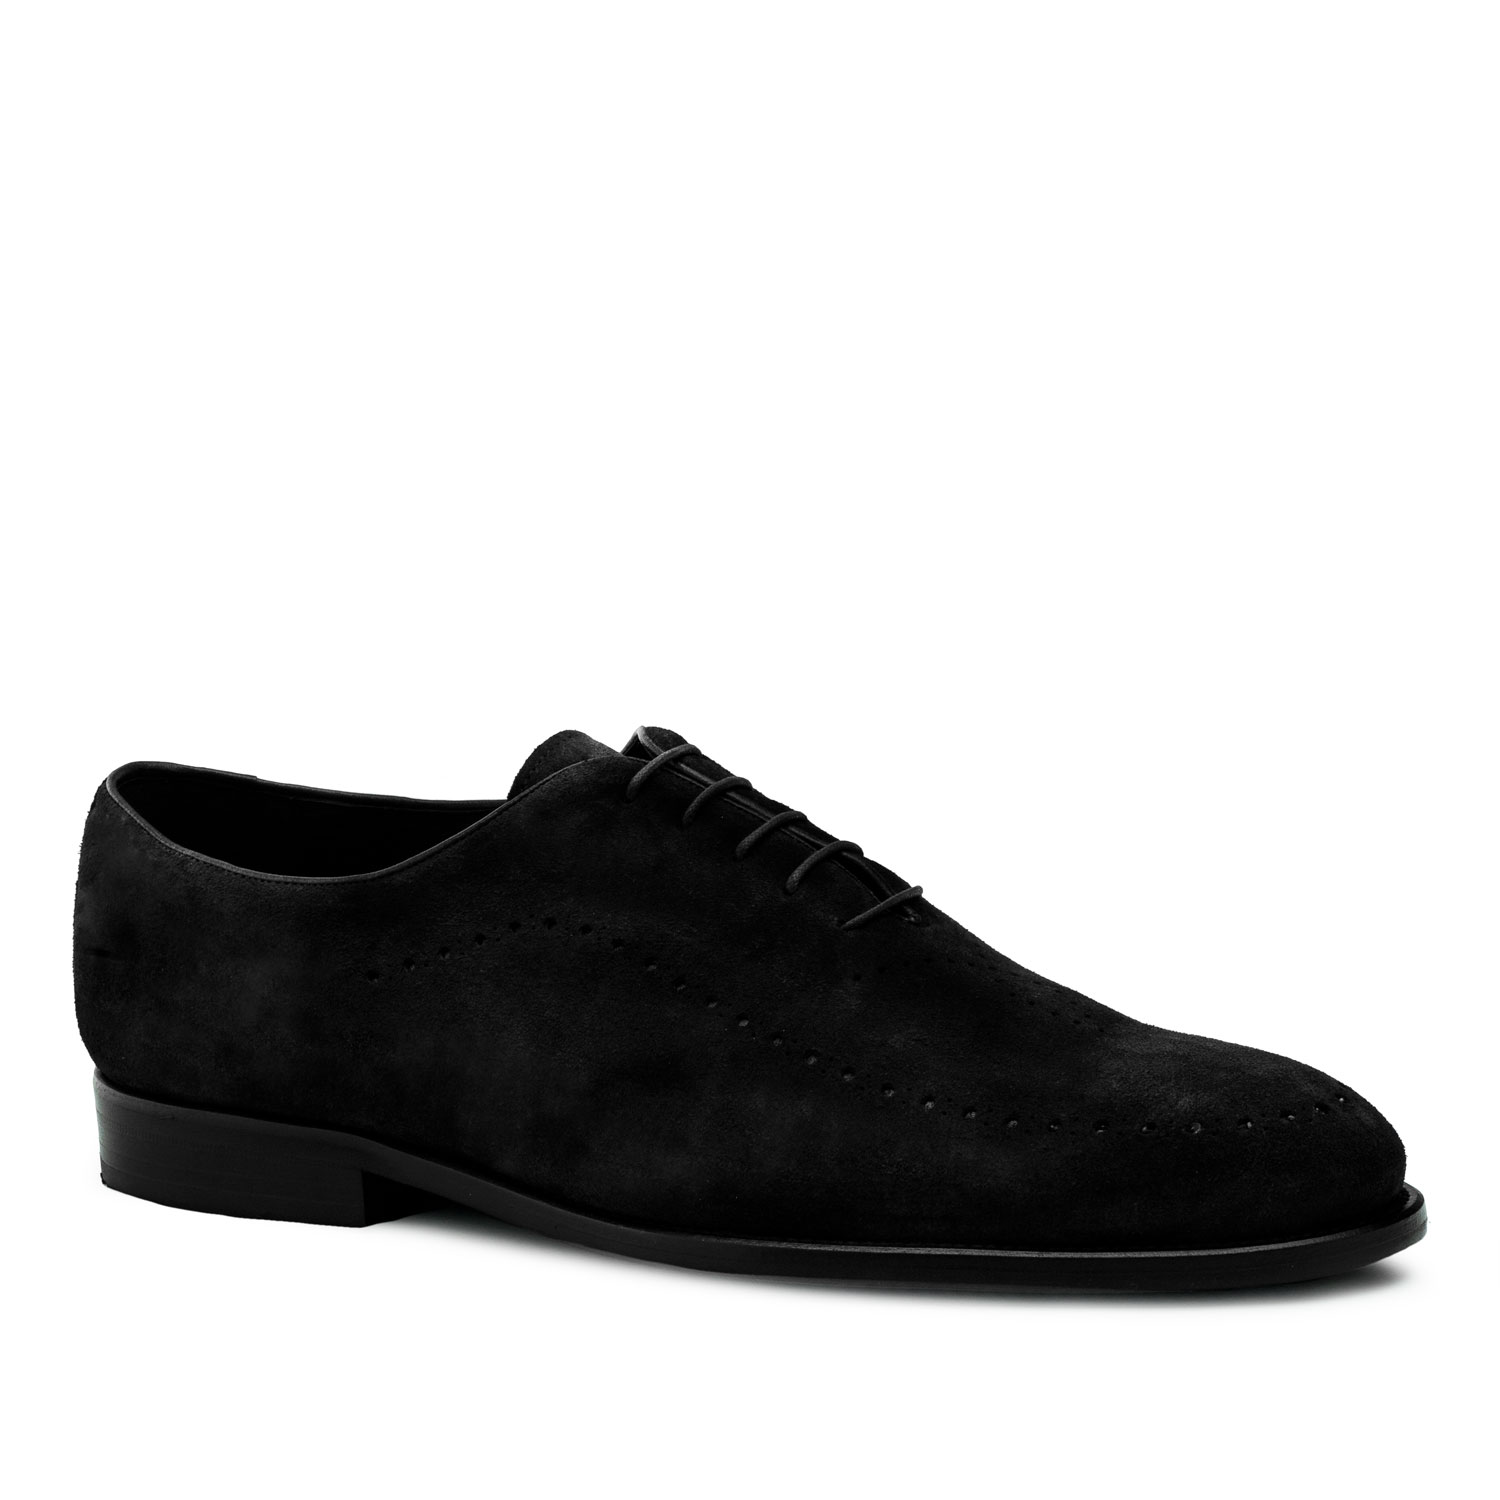 Men's Dress Shoes in Black Split Leather 